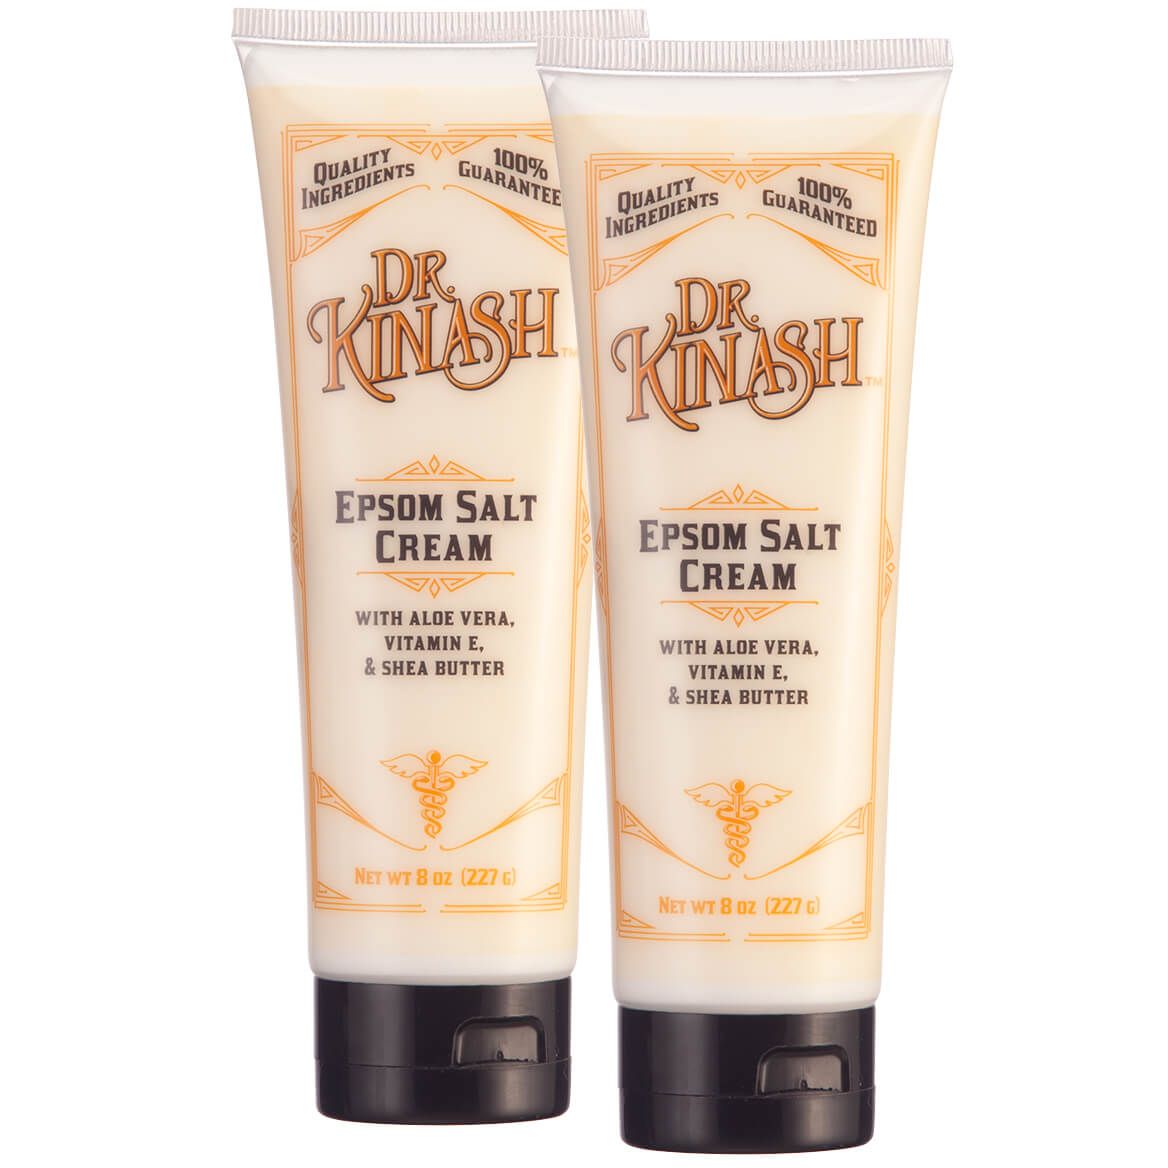 Dr. Kinash™ Epsom Salt Cream 8 oz., Set of 2 + '-' + 368908